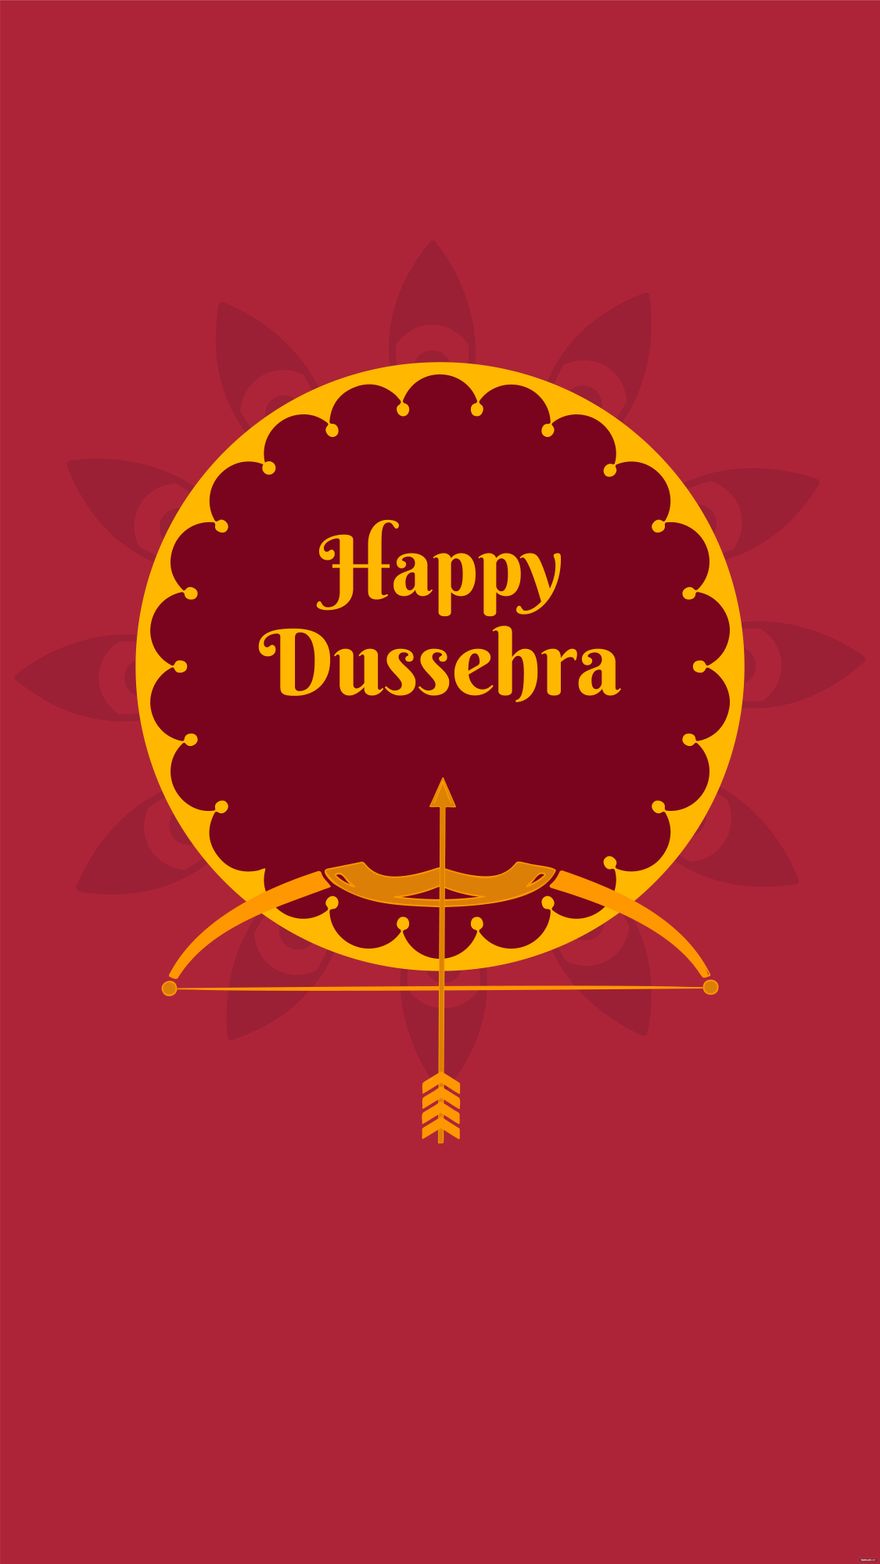 Dussehra Background - Images, HD, Free, Download 